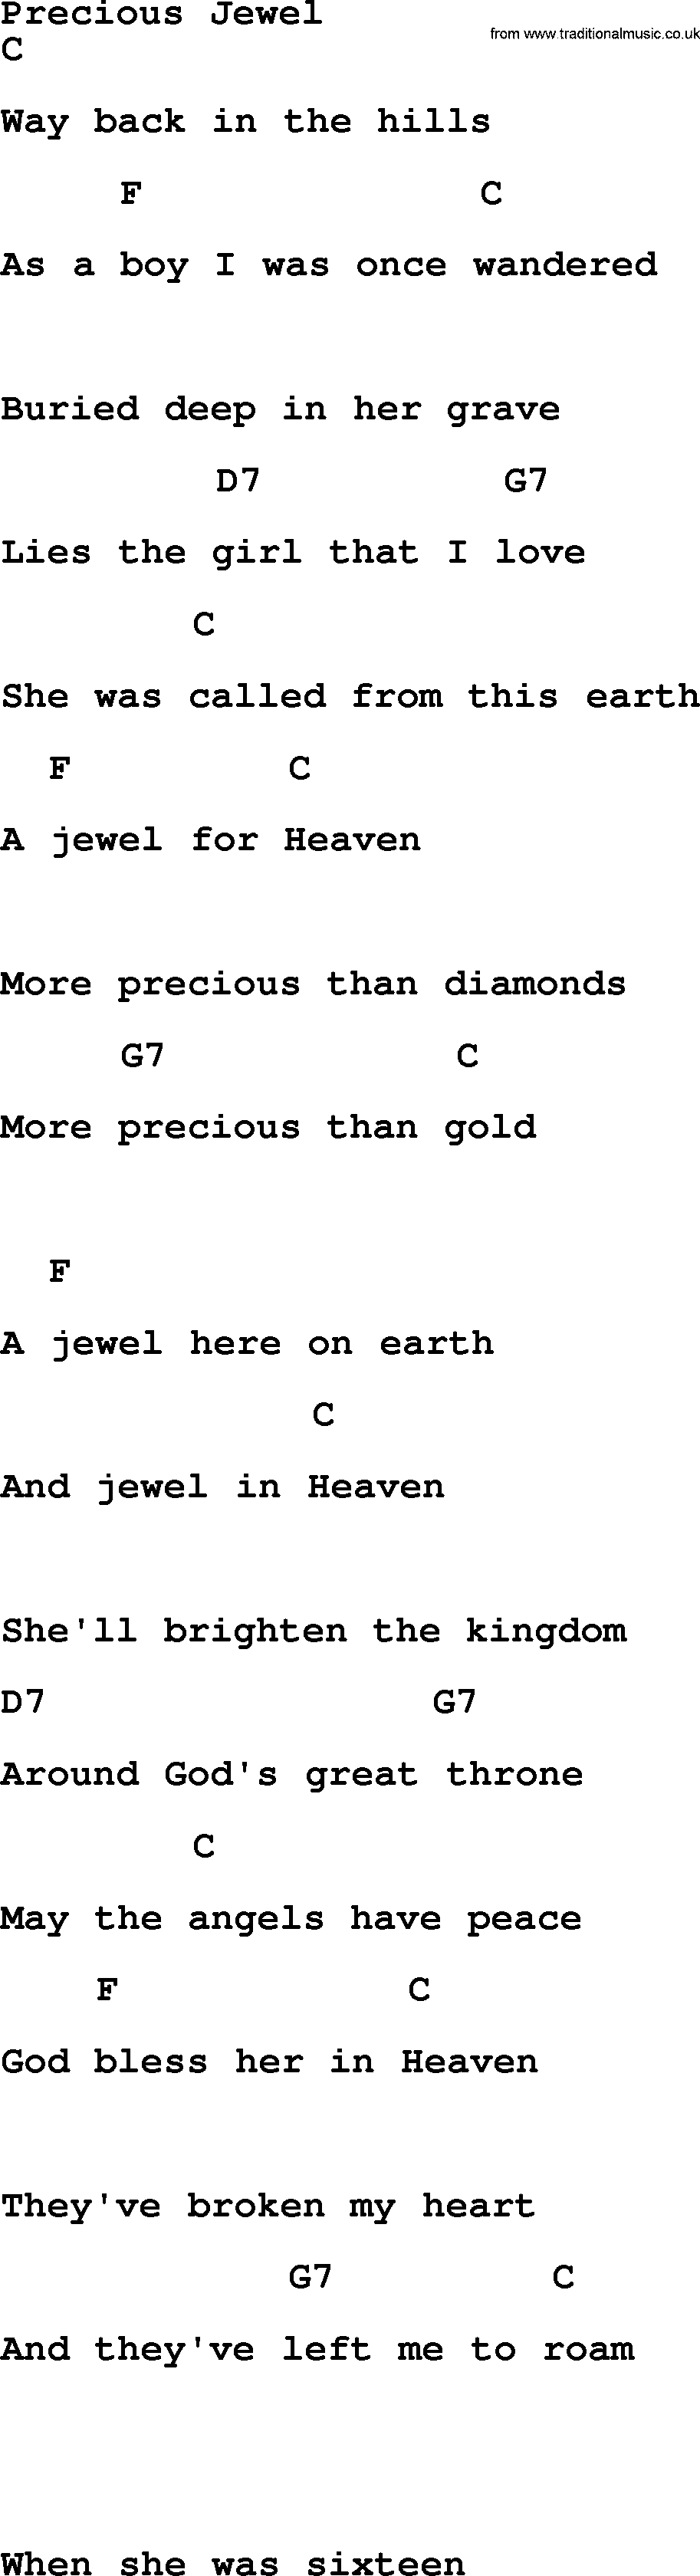 Bluegrass song: Precious Jewel, lyrics and chords